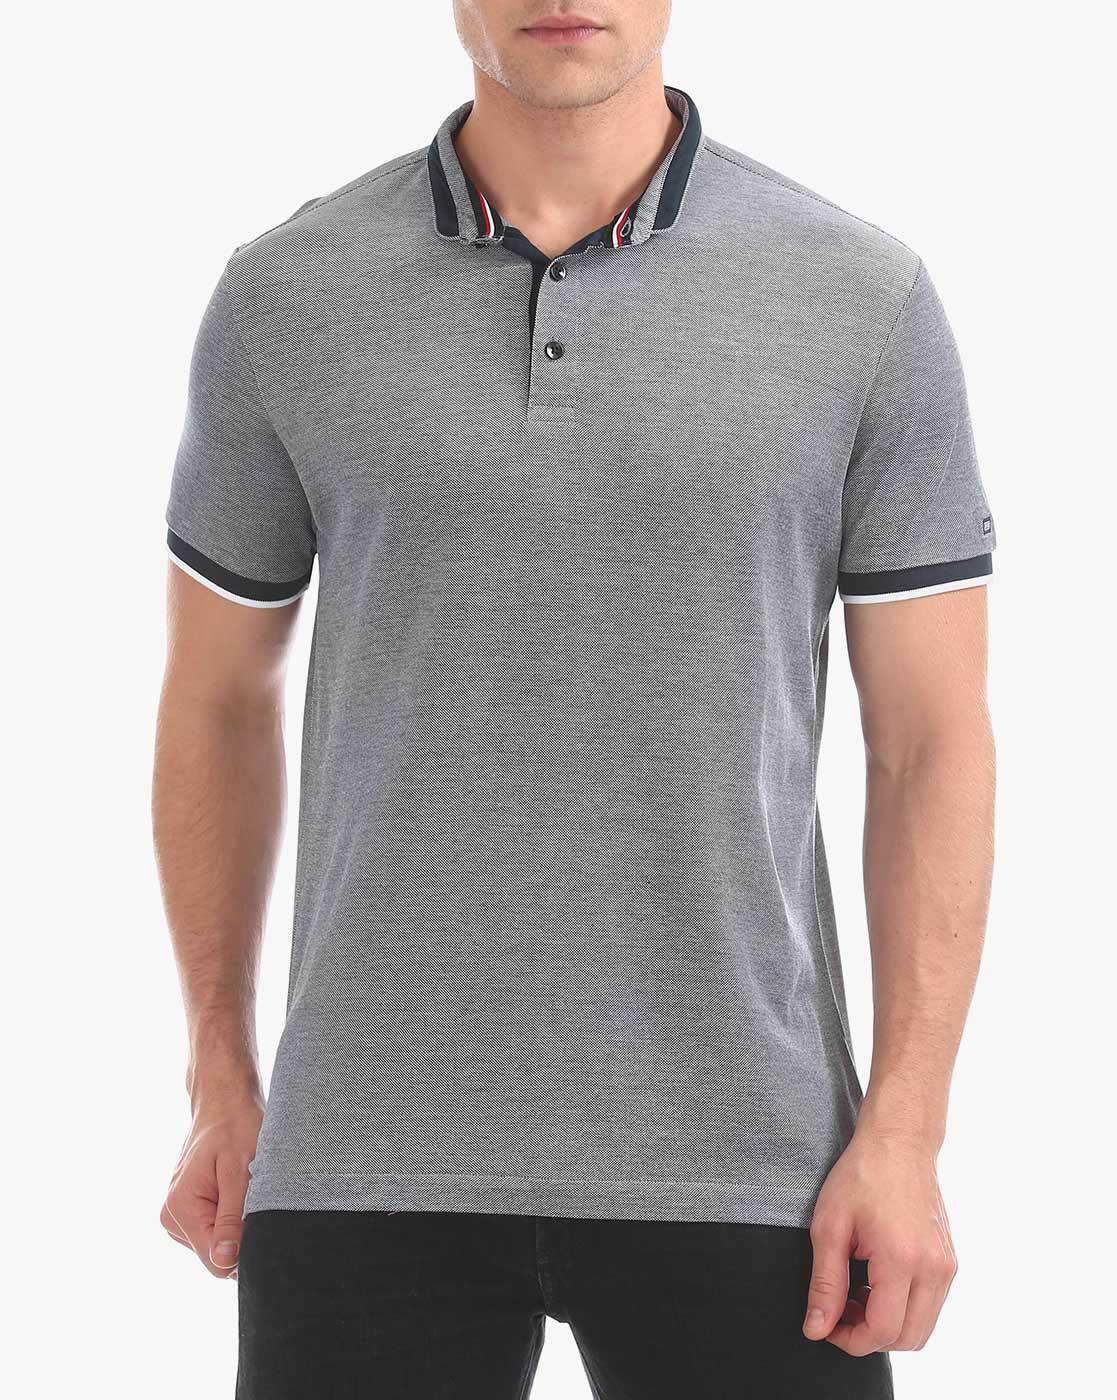 grey t shirt with collar